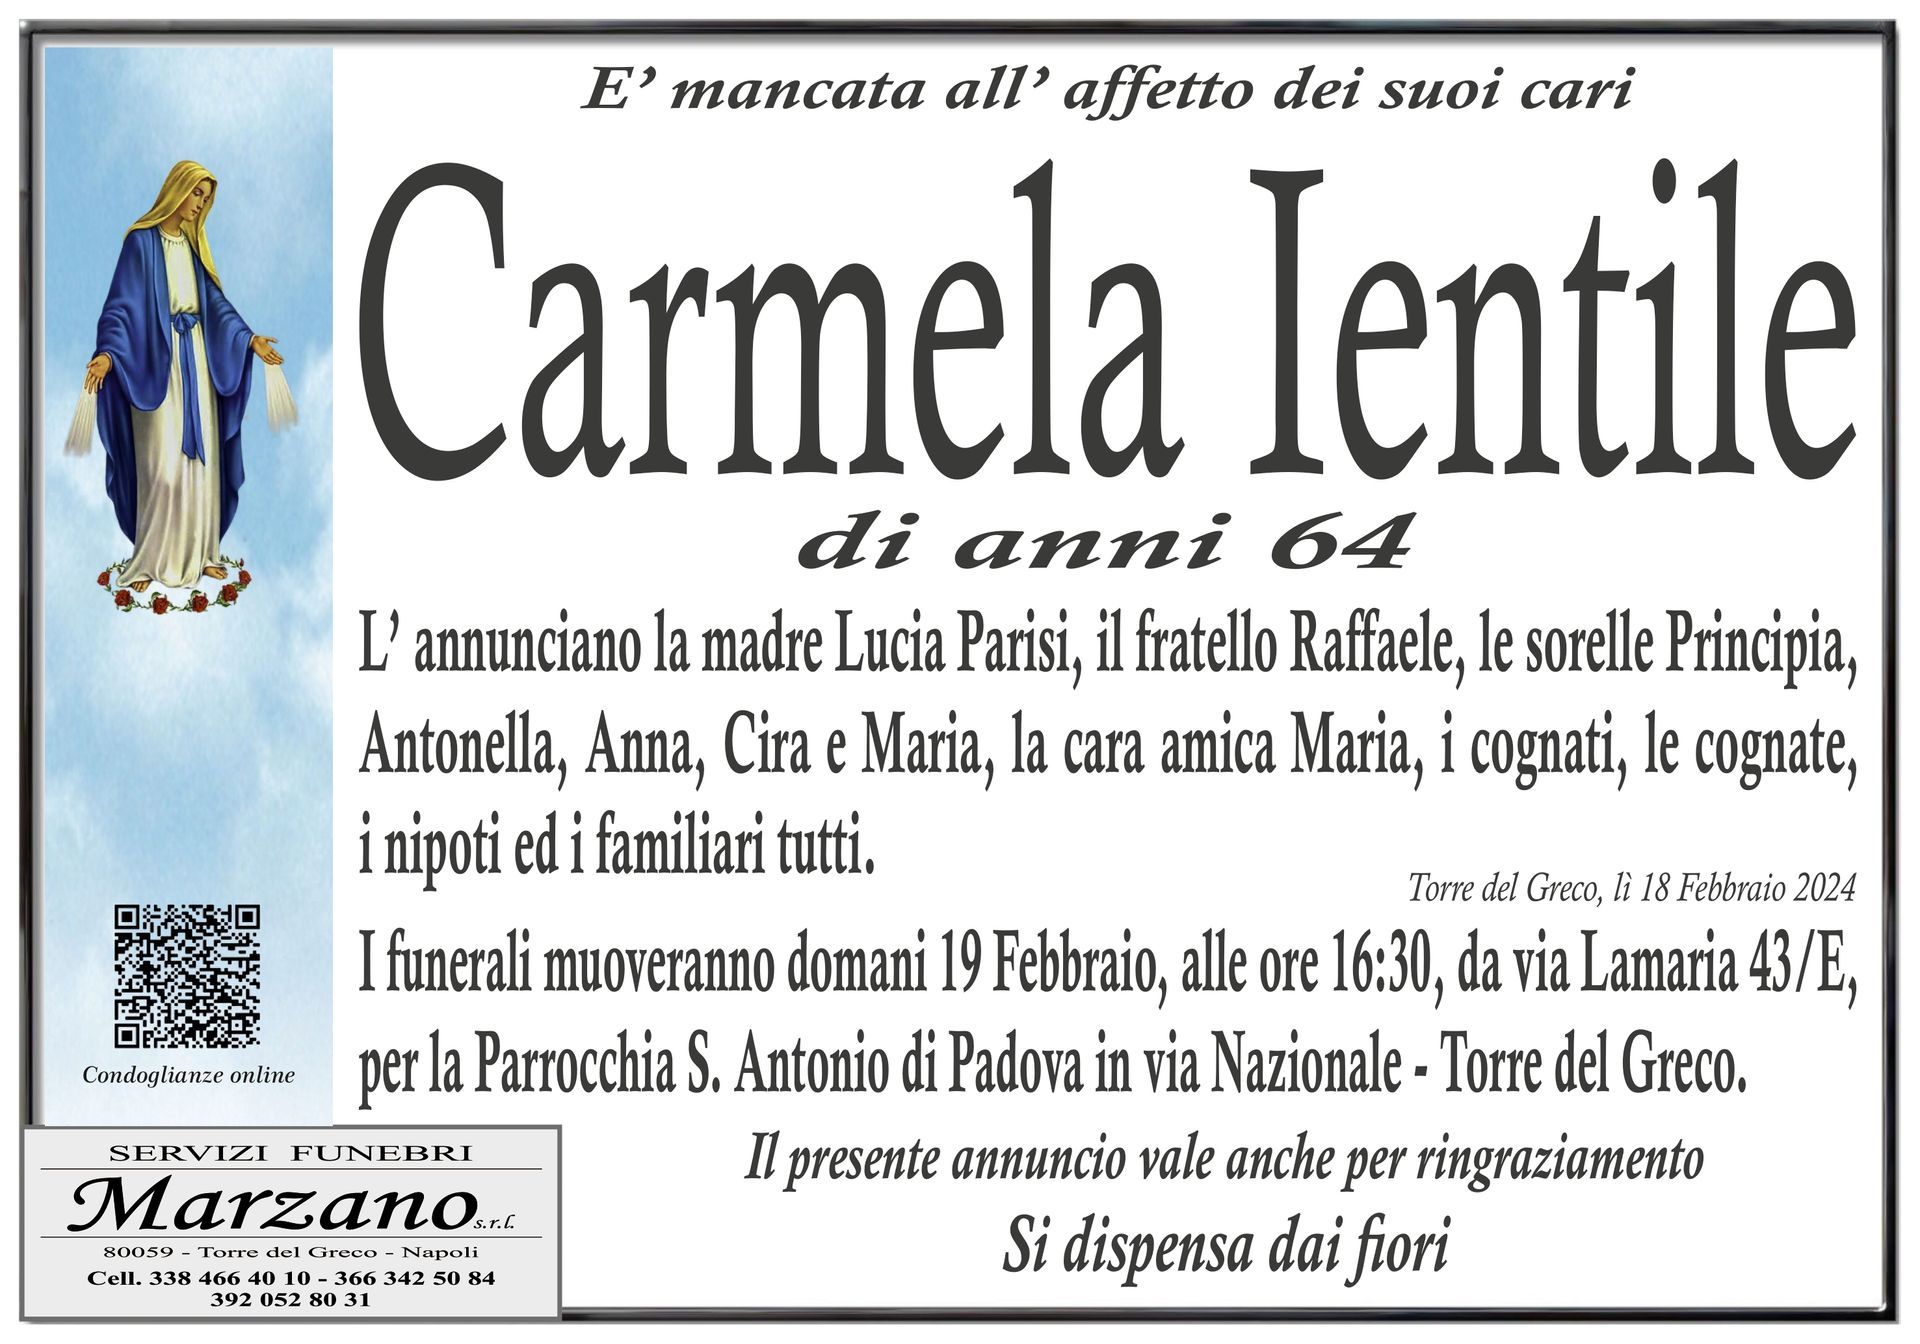 Carmela Ientile